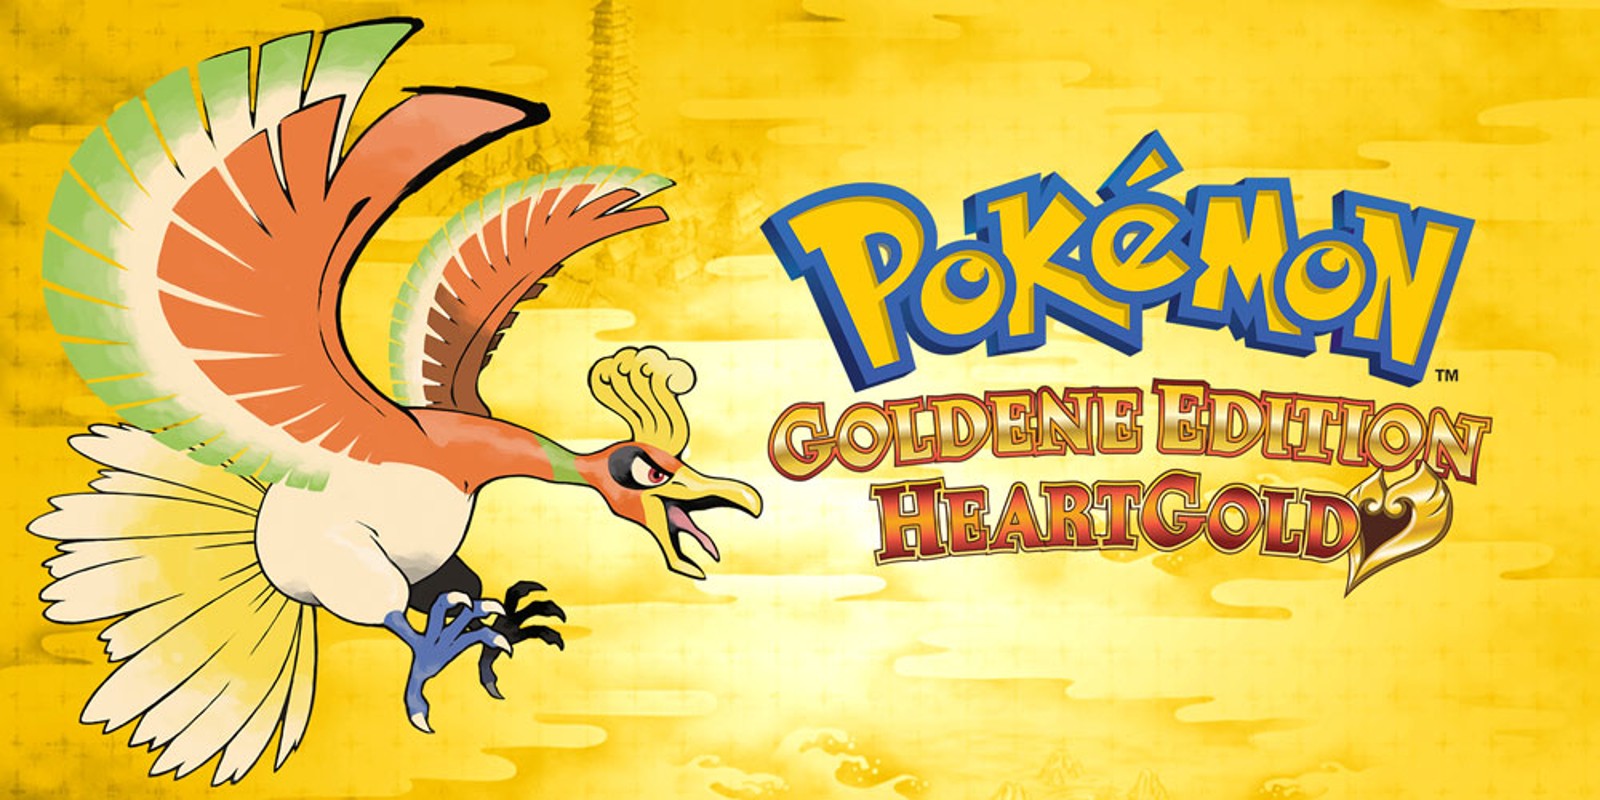 Pokémon Goldene Edition HeartGold